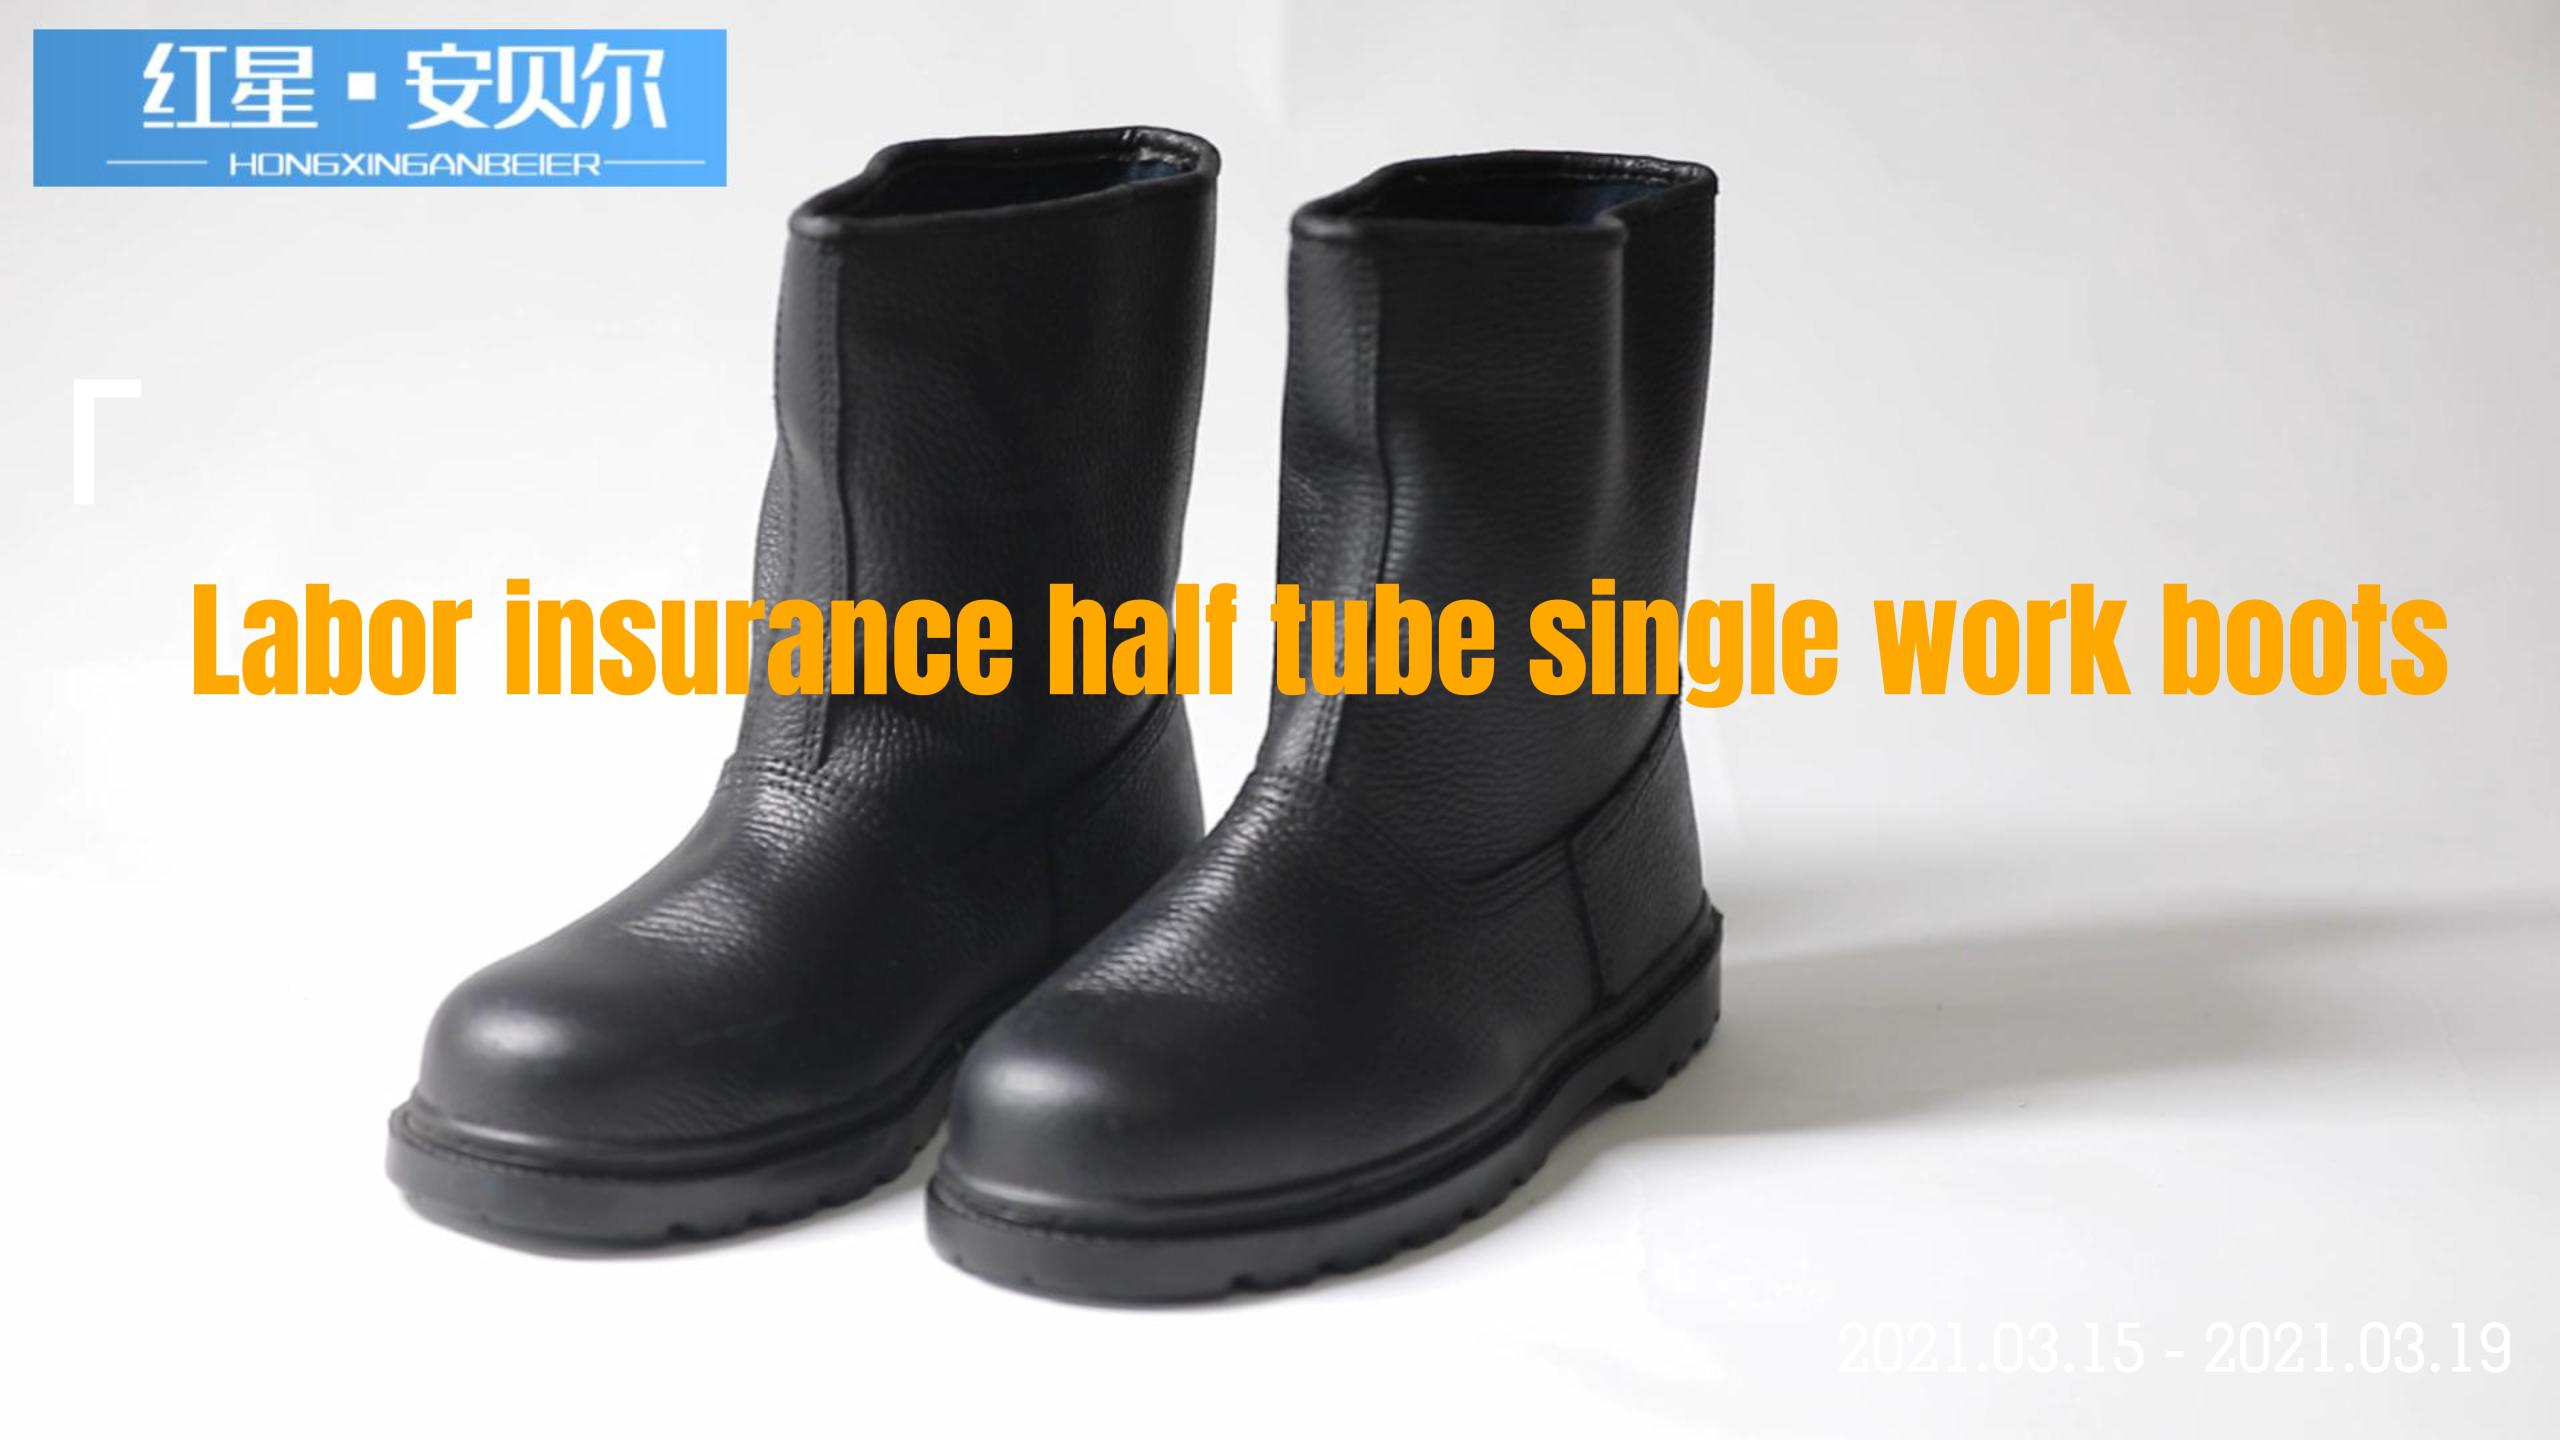 Labor insurance half tube single work boots